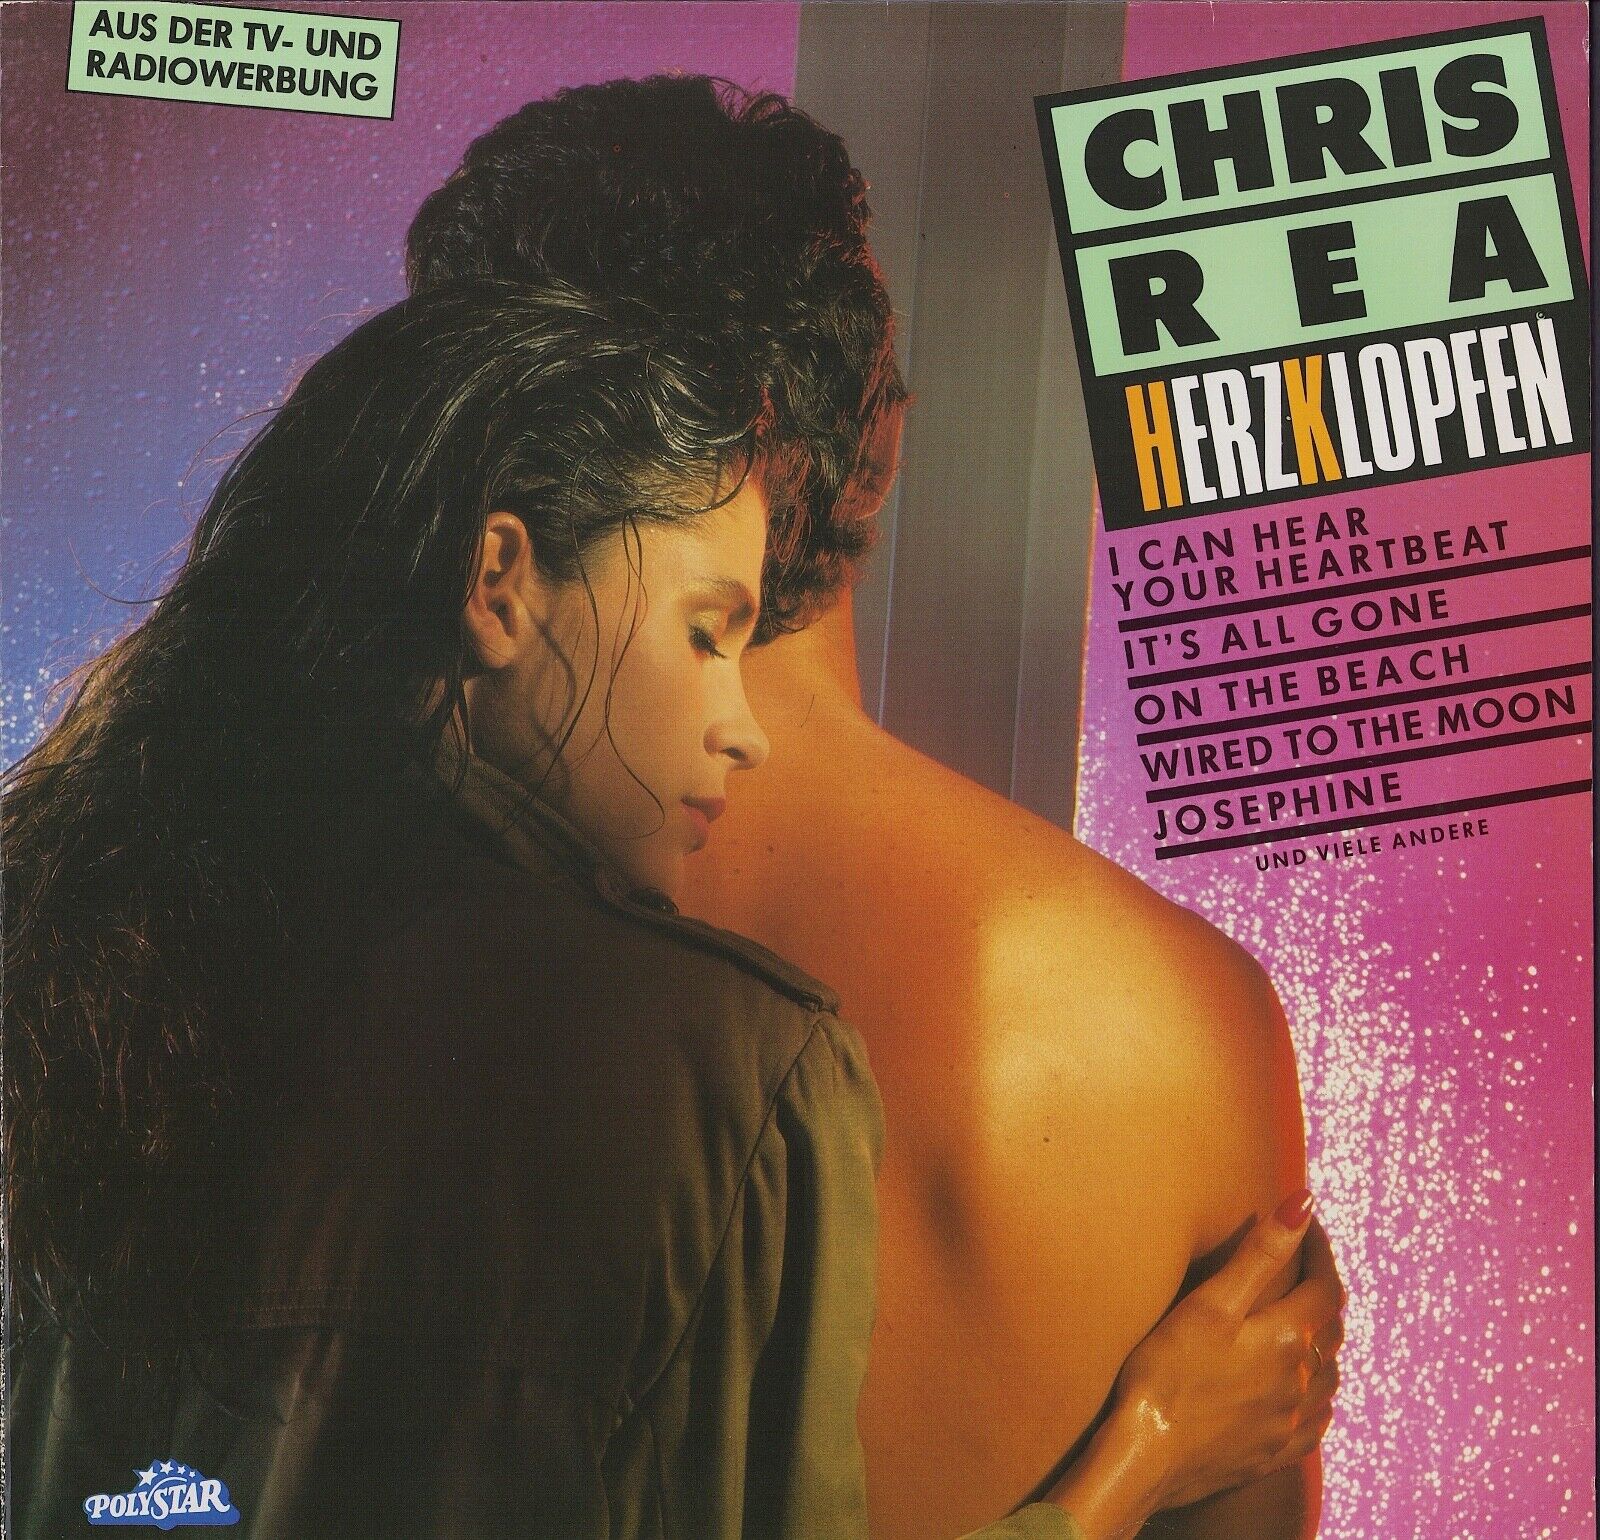 Chris Rea - Herzklopfen Vinyl LP